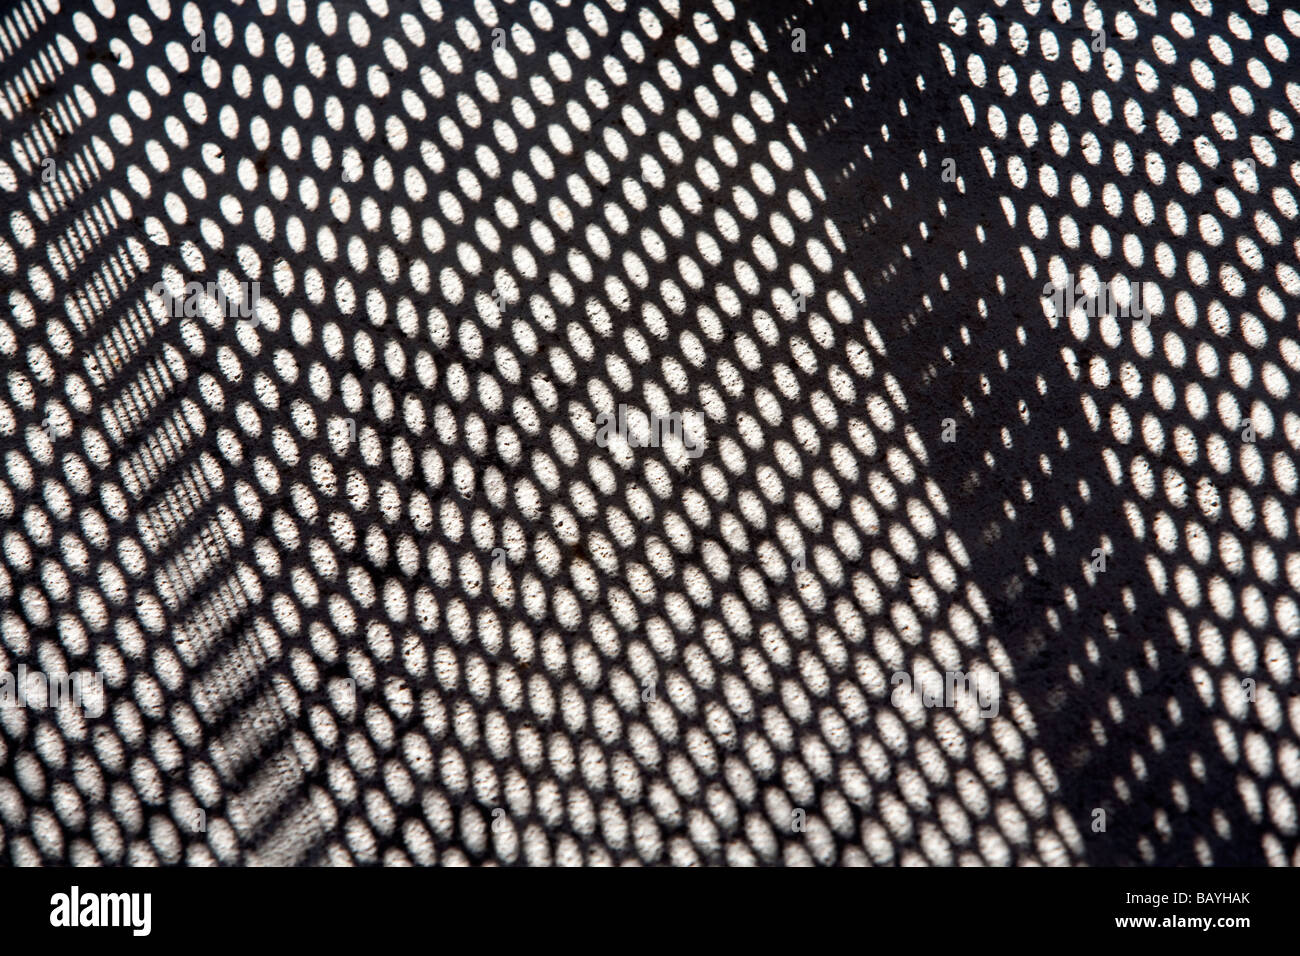 Perforated mesh shadow on concrete floor Stock Photo - Alamy